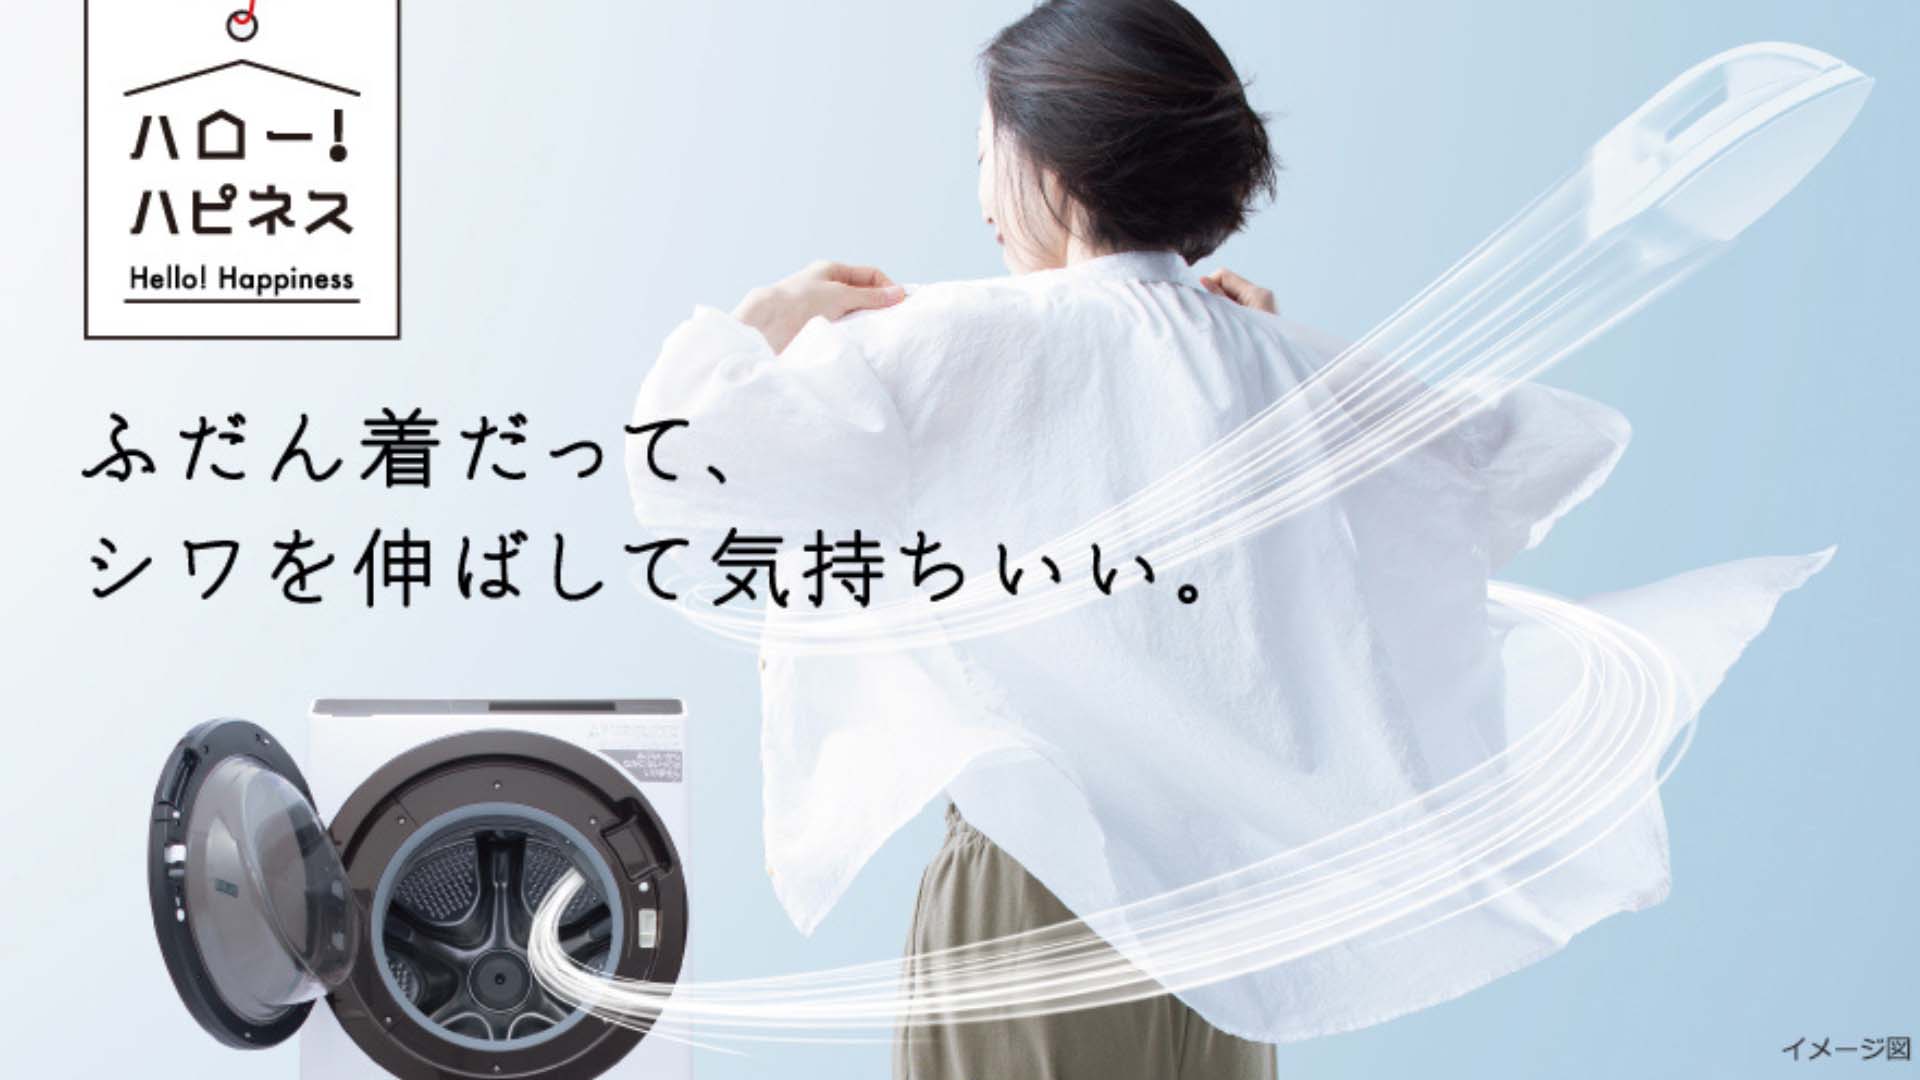 Máy giặt HITACHI BD-SG100GL